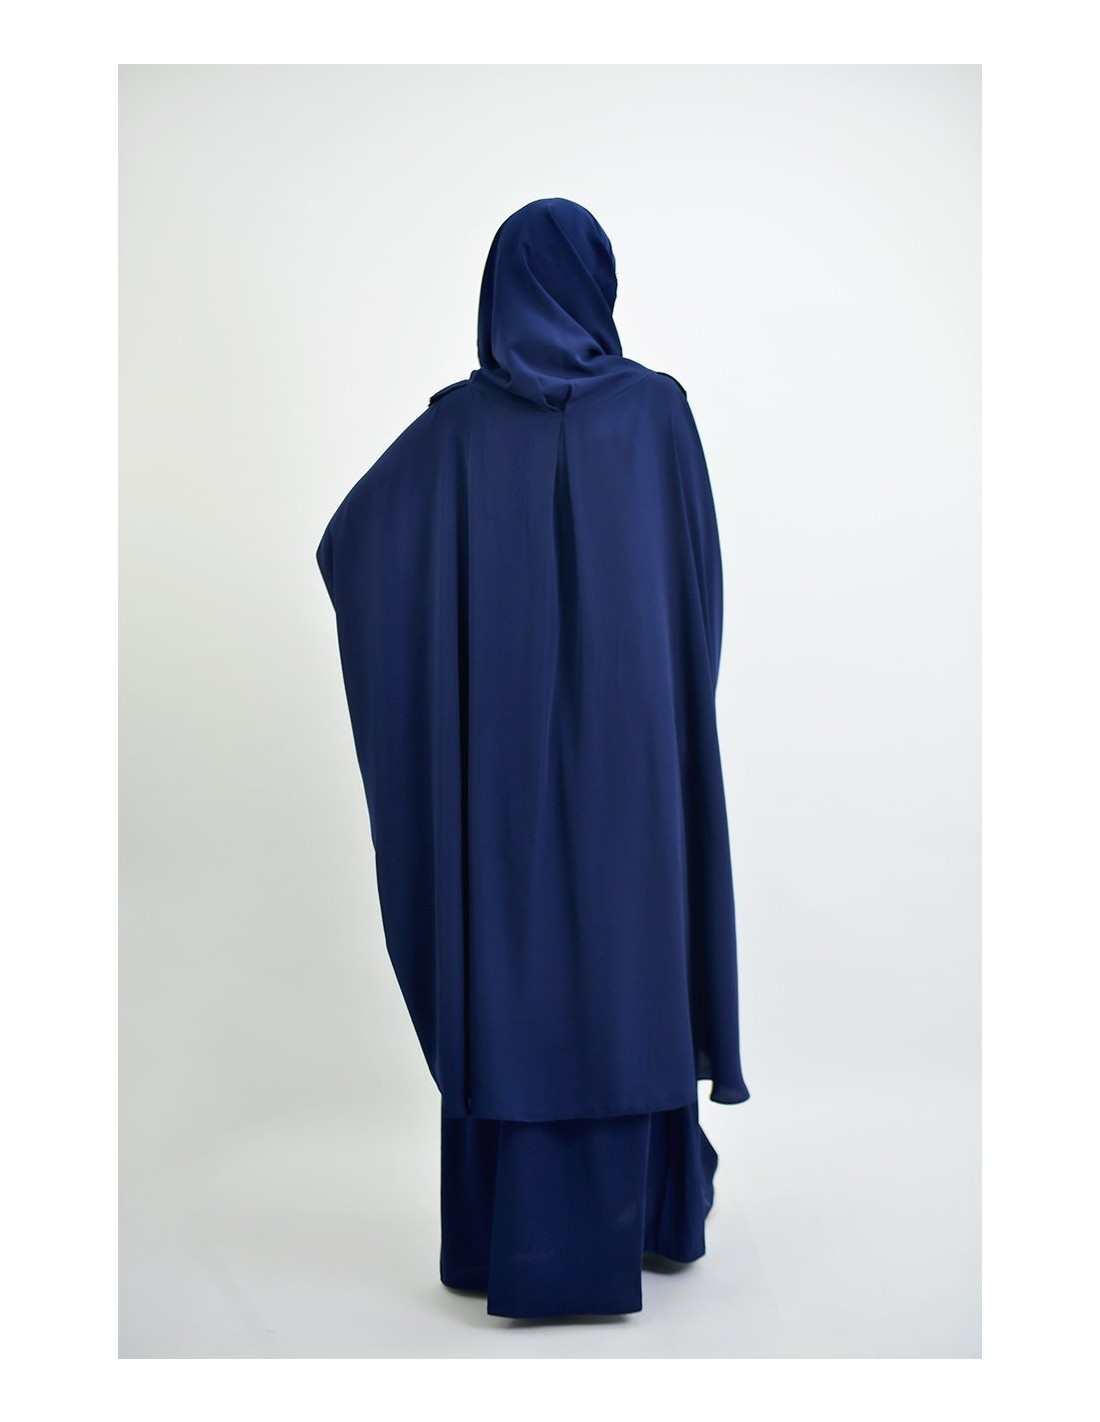 Tunic set with integrated hijab + skirt